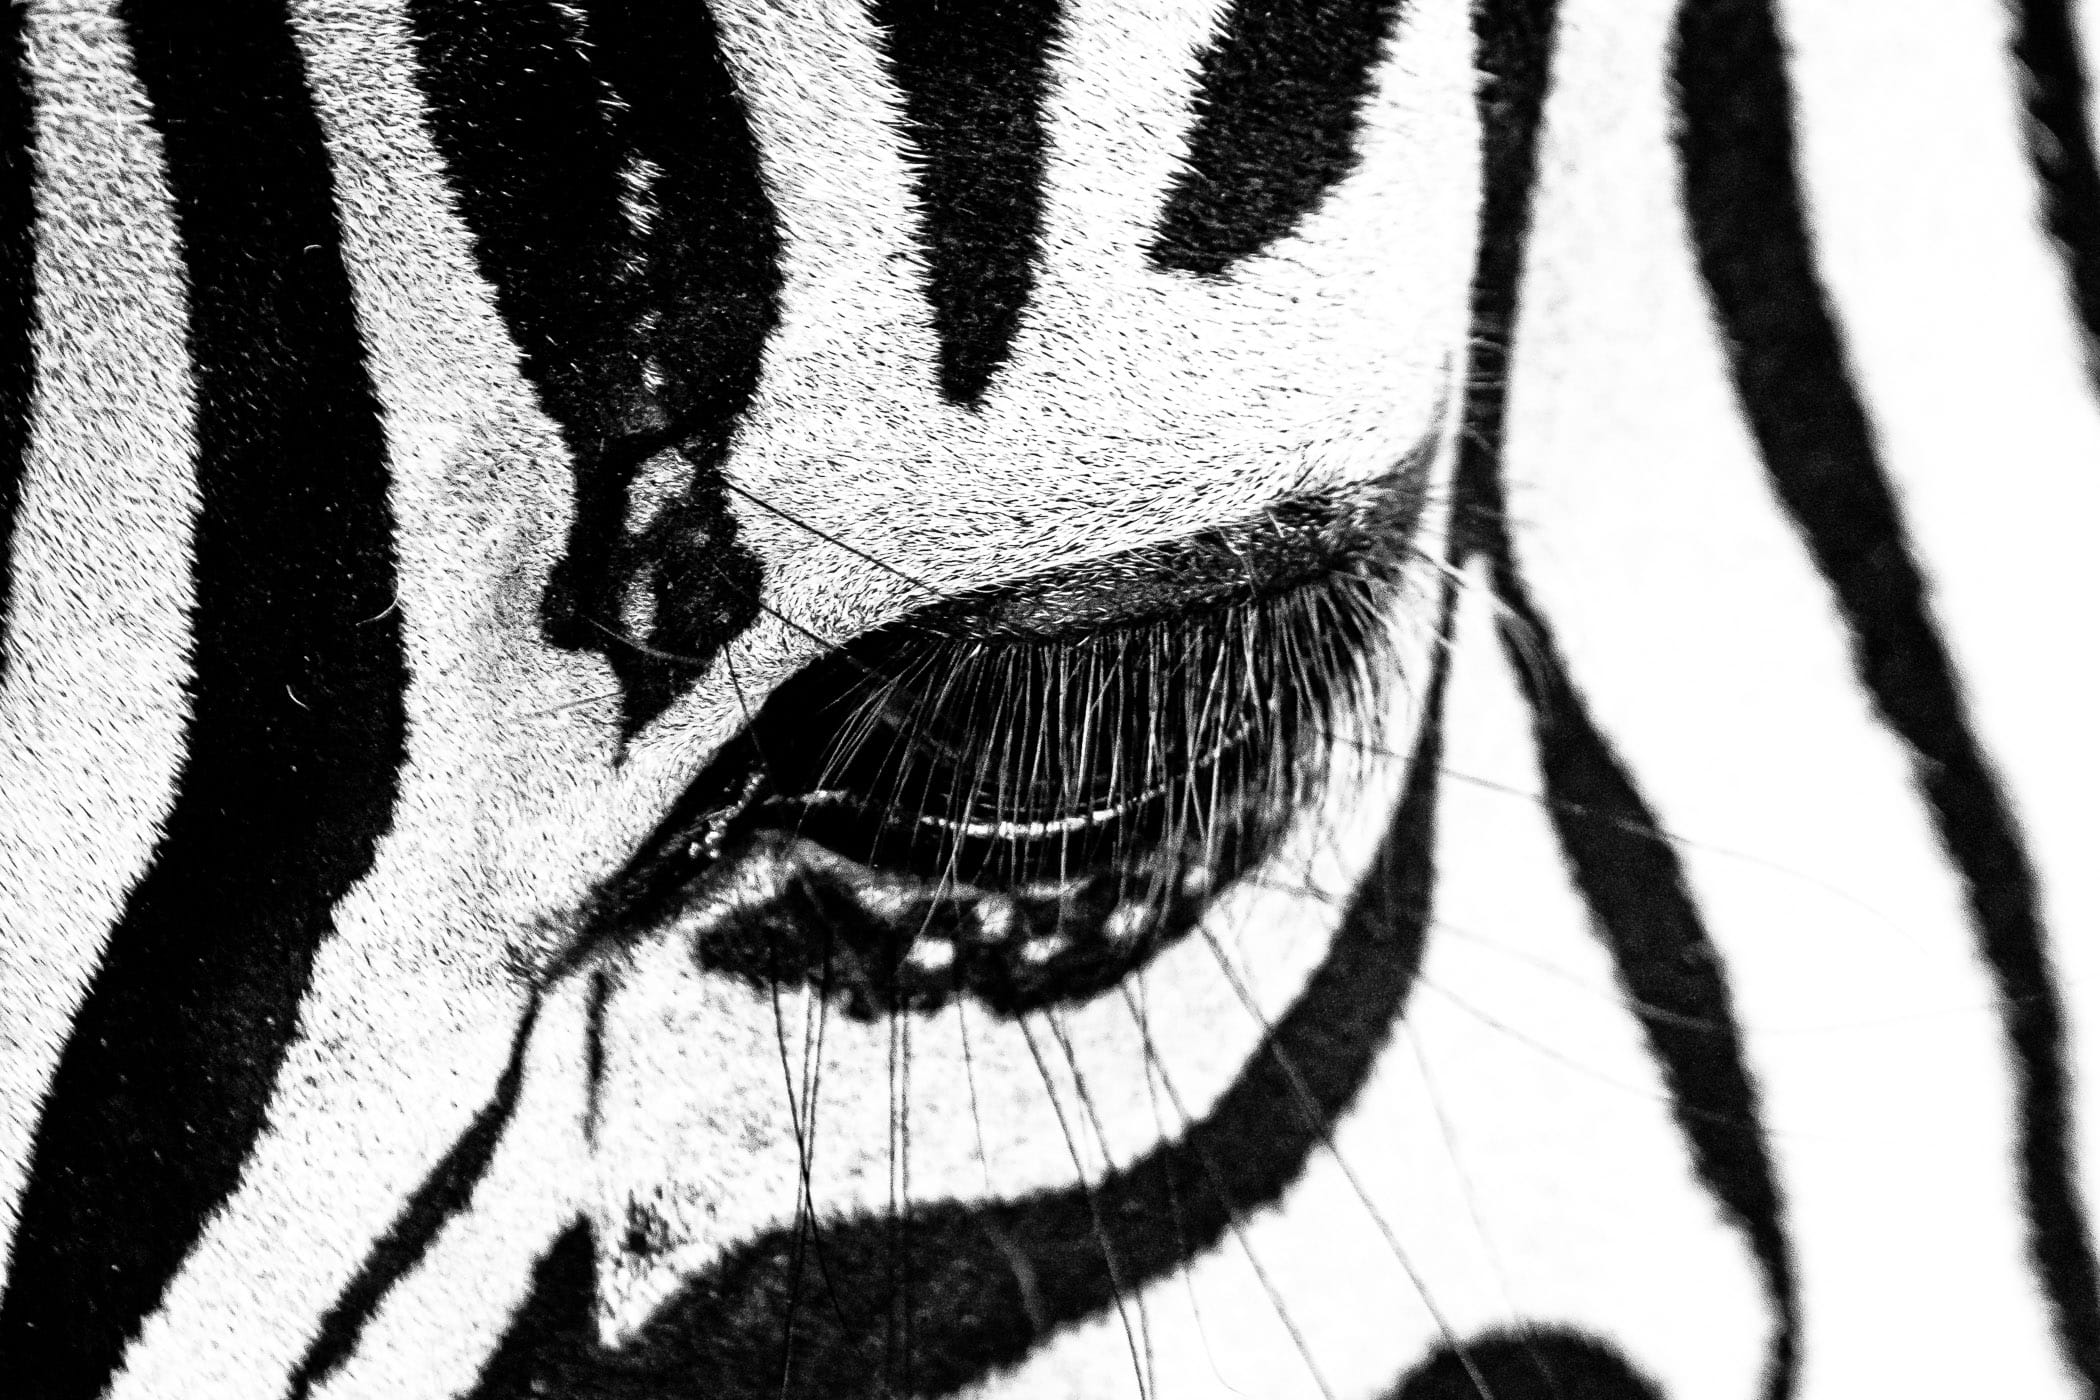 Detail of a zebra's eye spotted at Sharkarosa Ranch, Pilot Point, Texas.